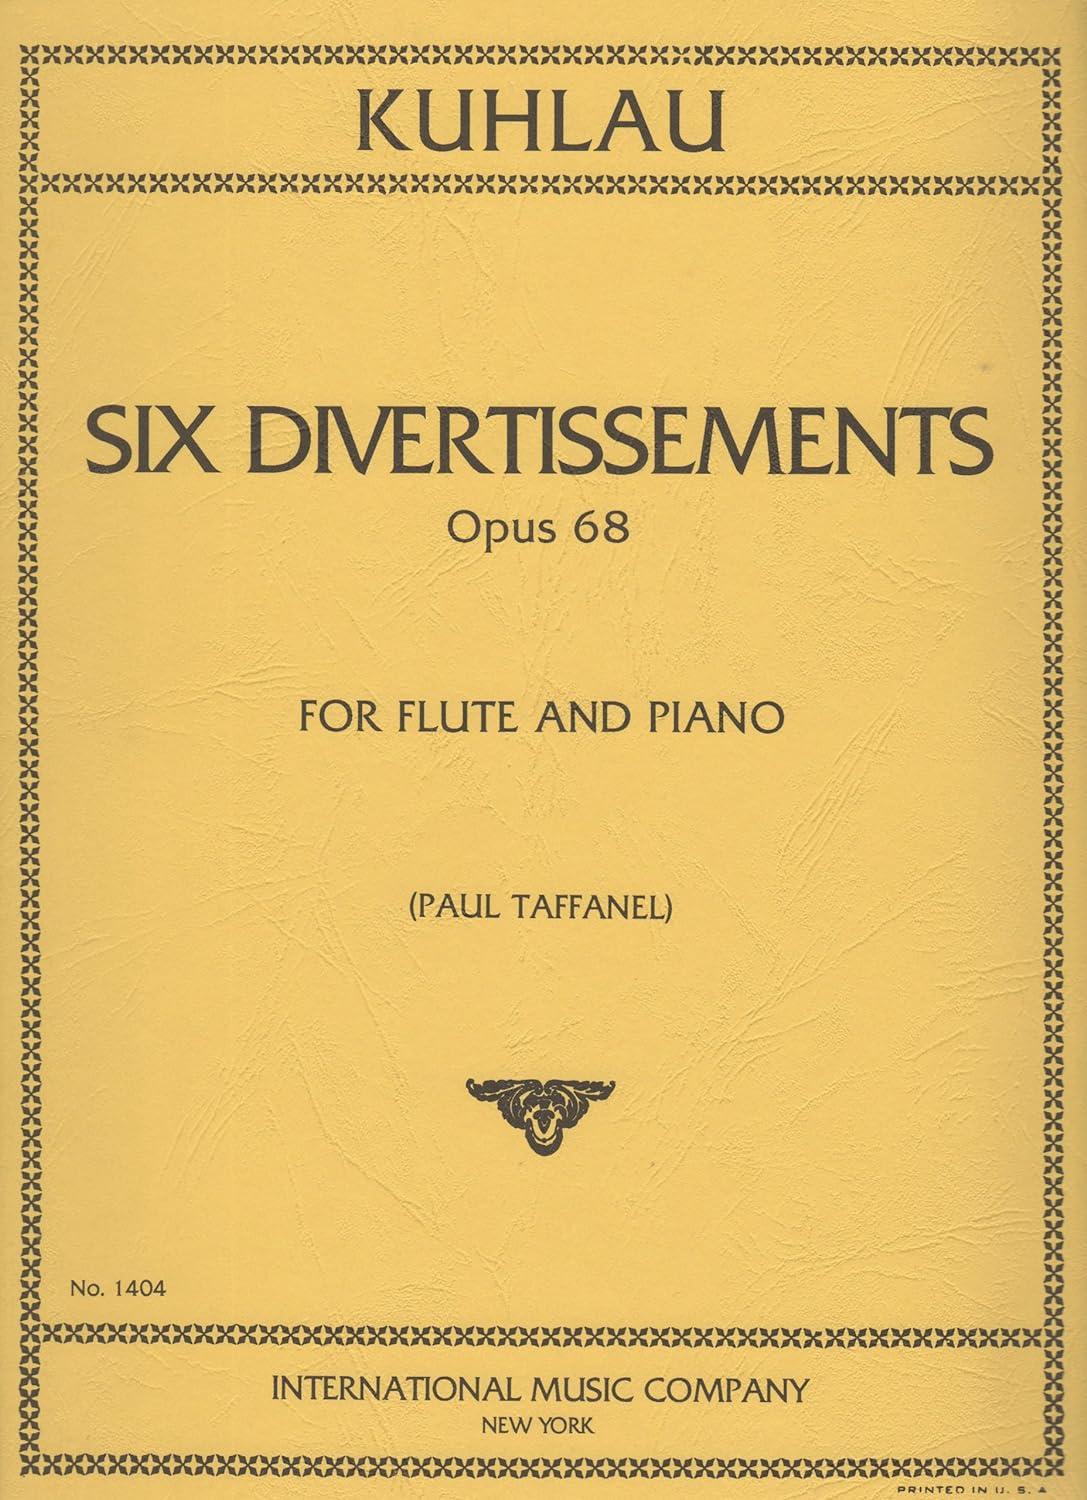 6 Divertimenti Op. 68 (Taffanel) - Friedrich Kuhlau | Suono Flauti